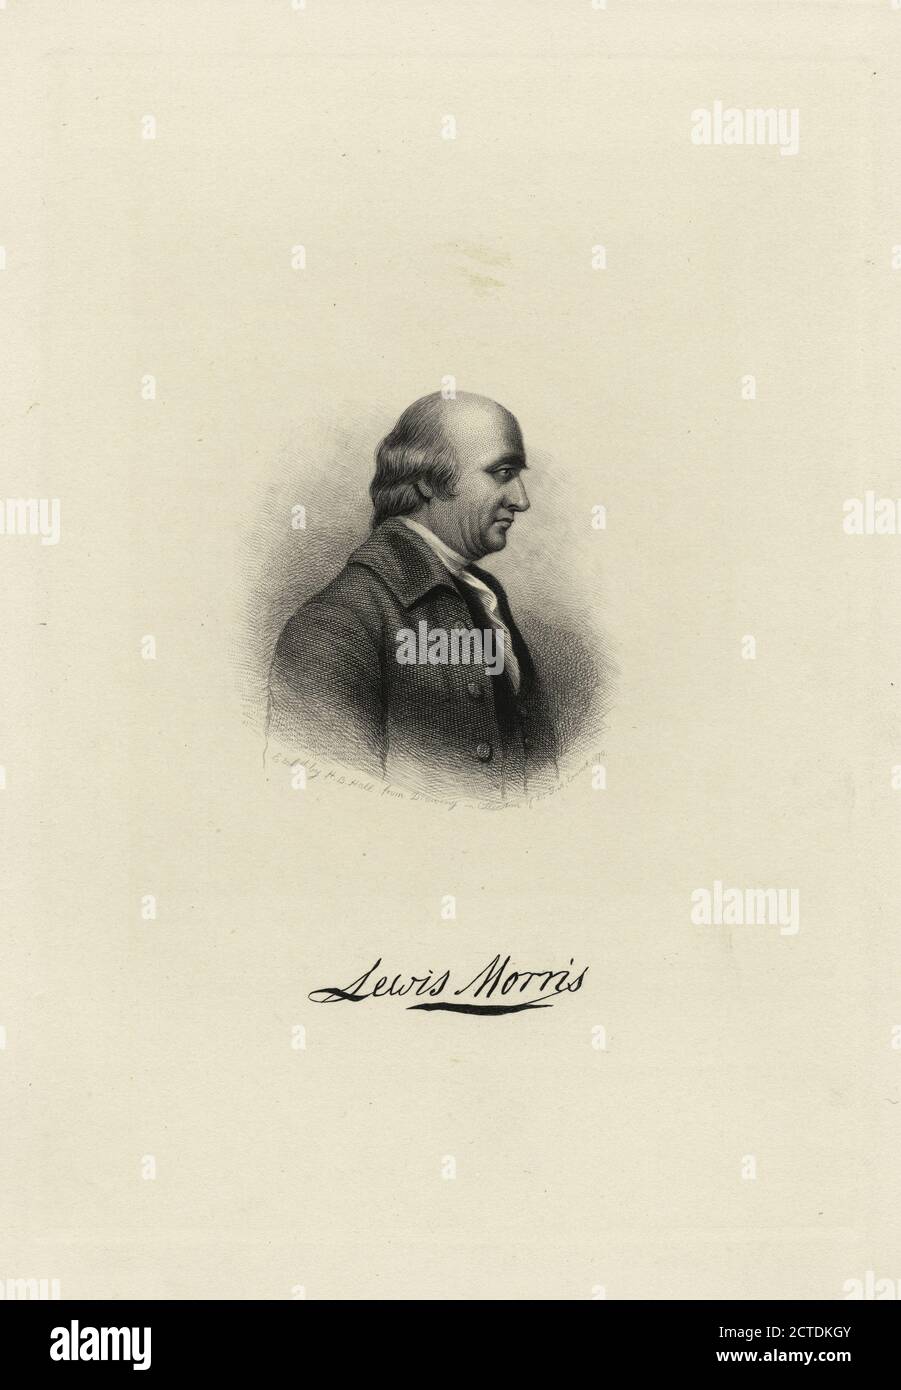 Lewis Morris., still image, Prints, 1783 - 1889 Stock Photo